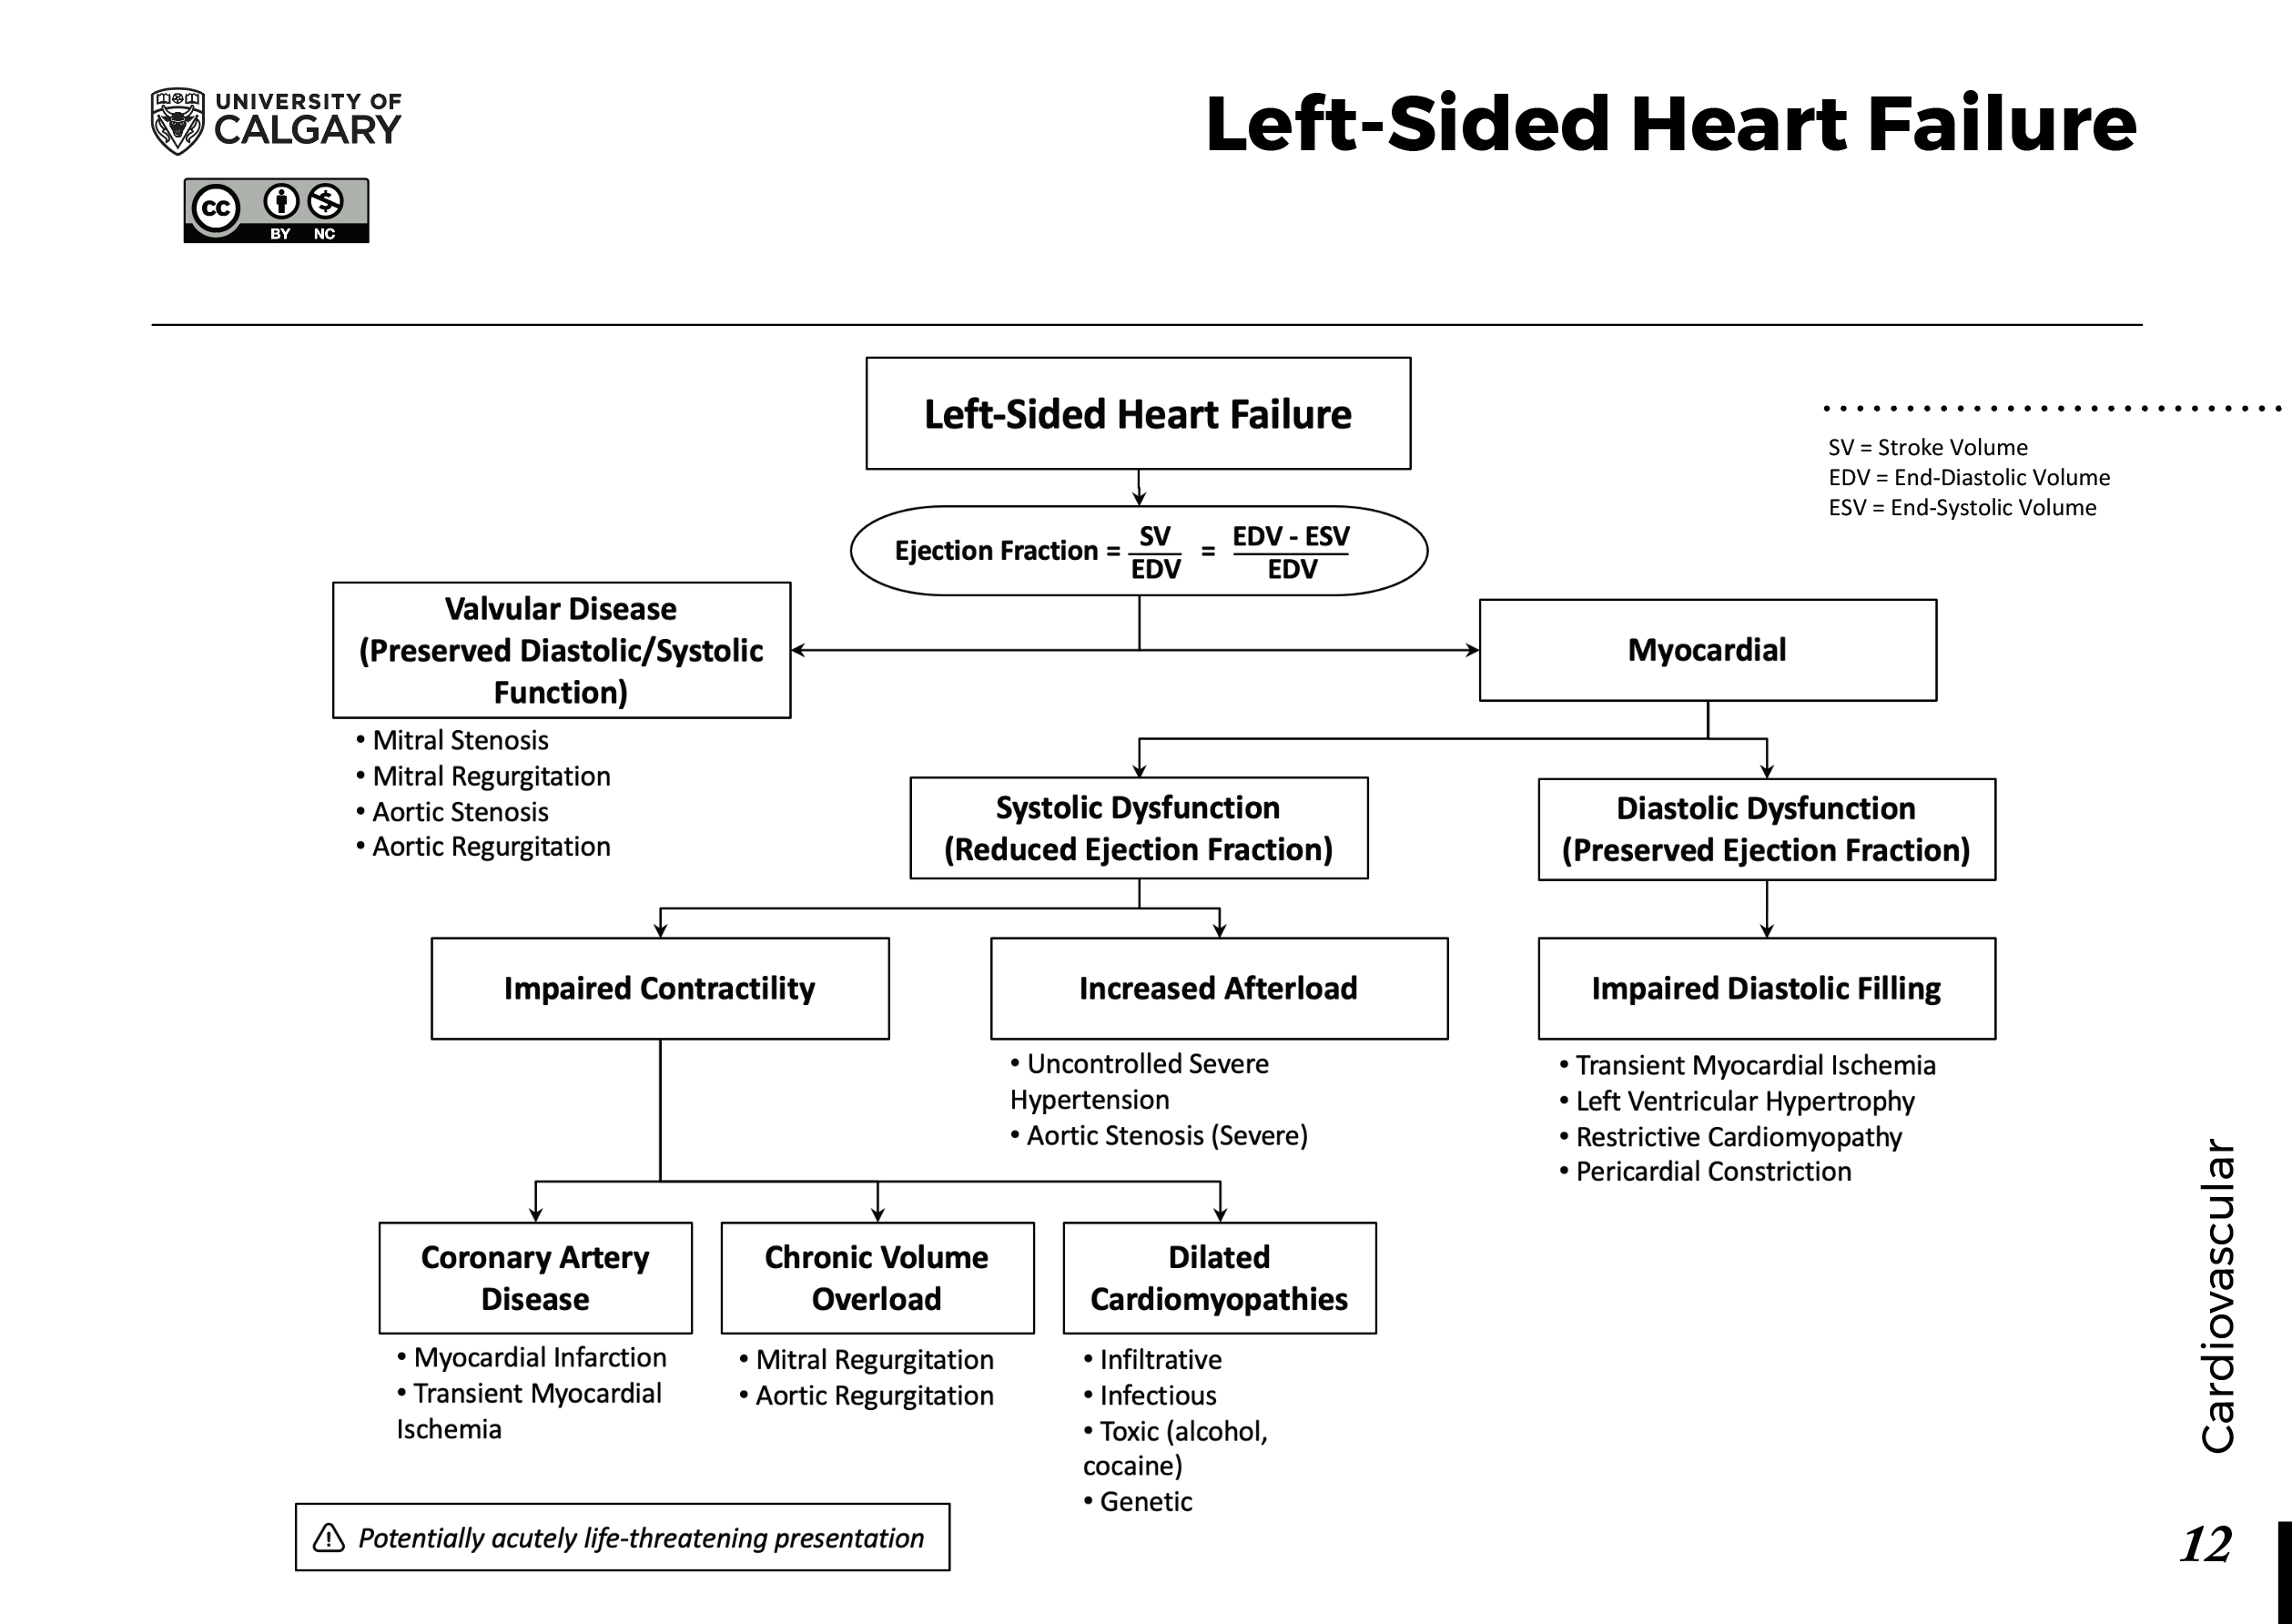 LEFT-SIDED HEART FAILURE Scheme